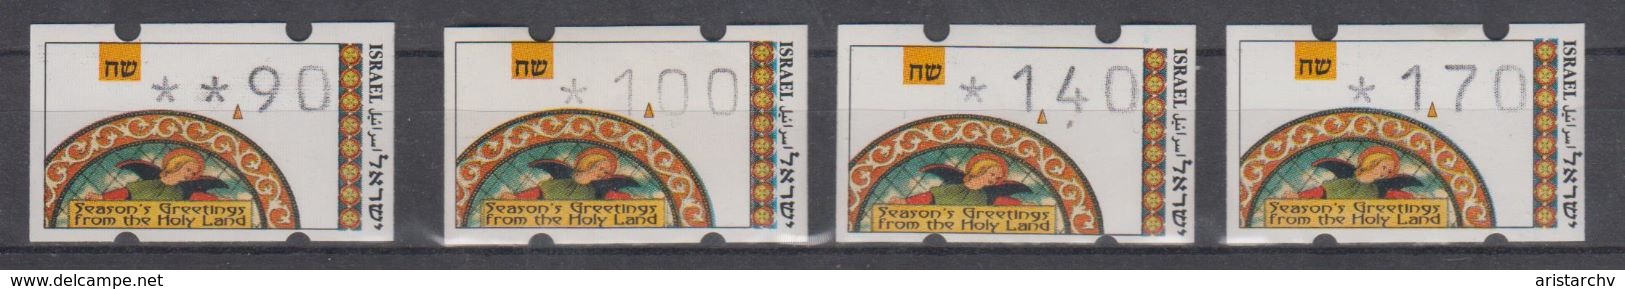 ISRAEL 1994 SIMA ATM CHRISTMAS SEASON'S GREETINGS FROM THE HOLY LAND 0.90 1 1.40 1.70 SHEKELS - Frankeervignetten (Frama)